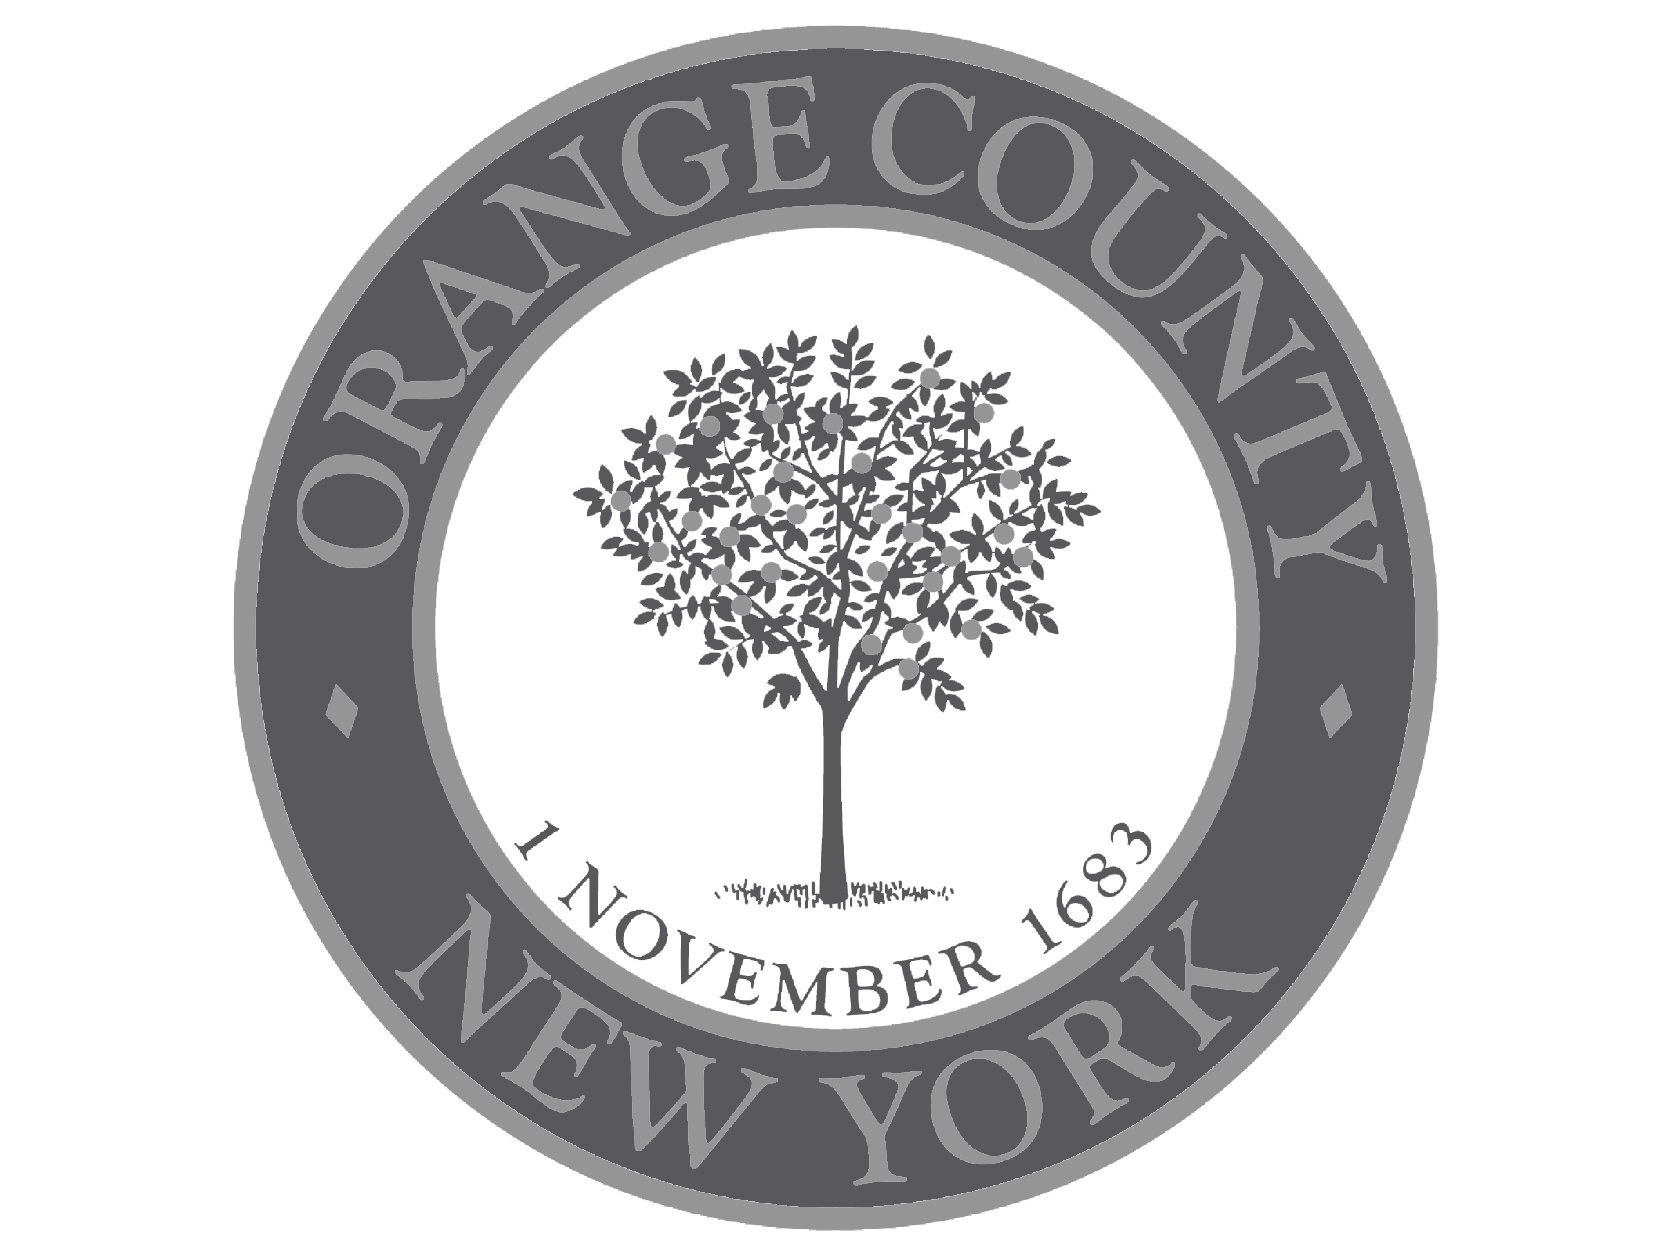 橙县纽约Logo